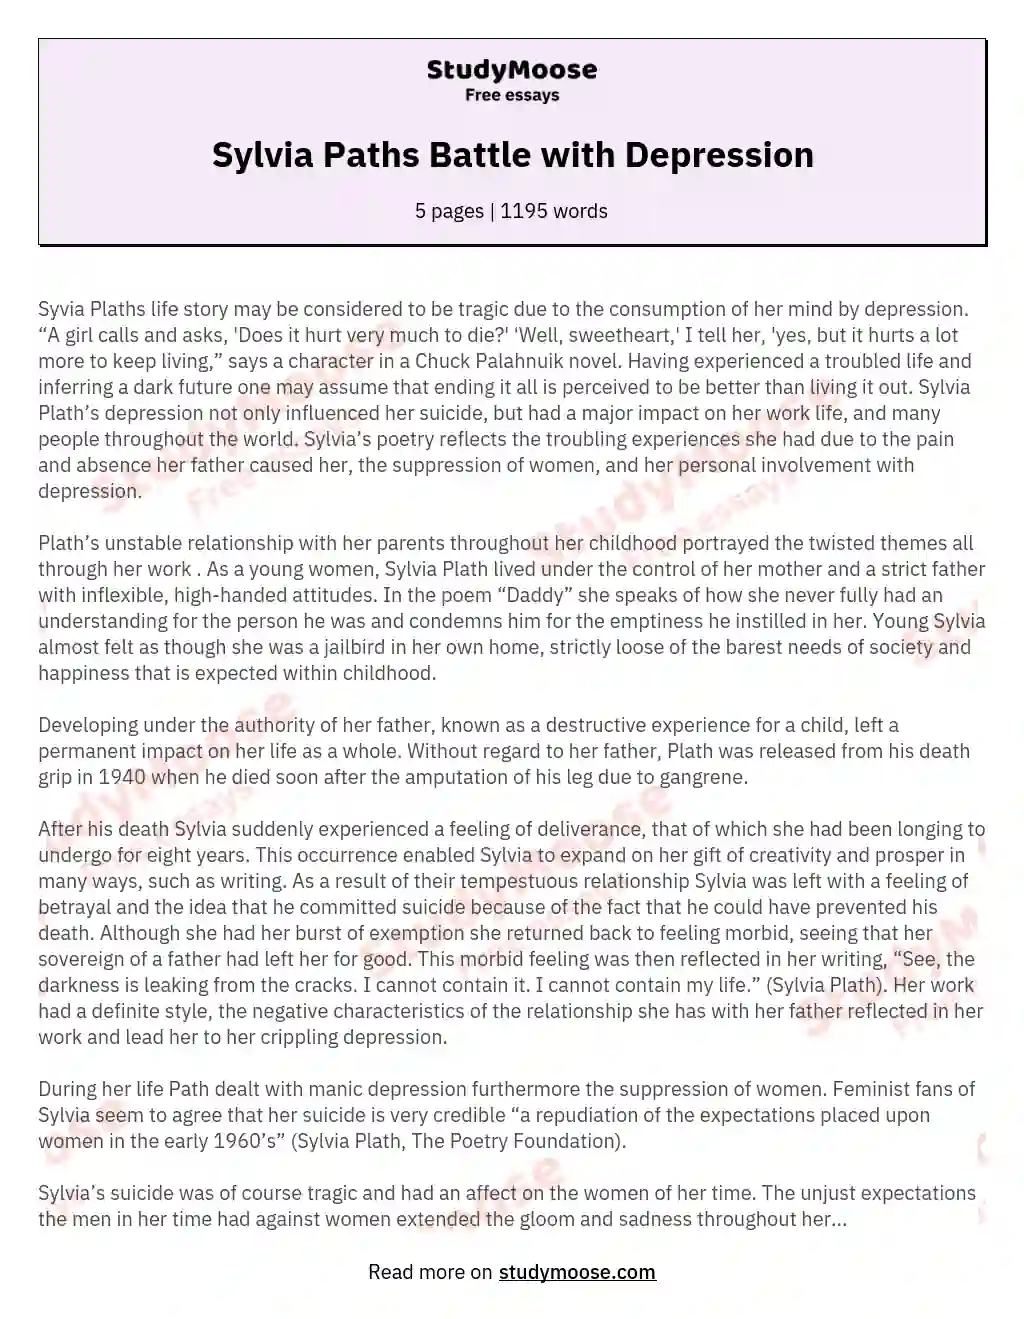 Sylvia Paths Battle with Depression essay